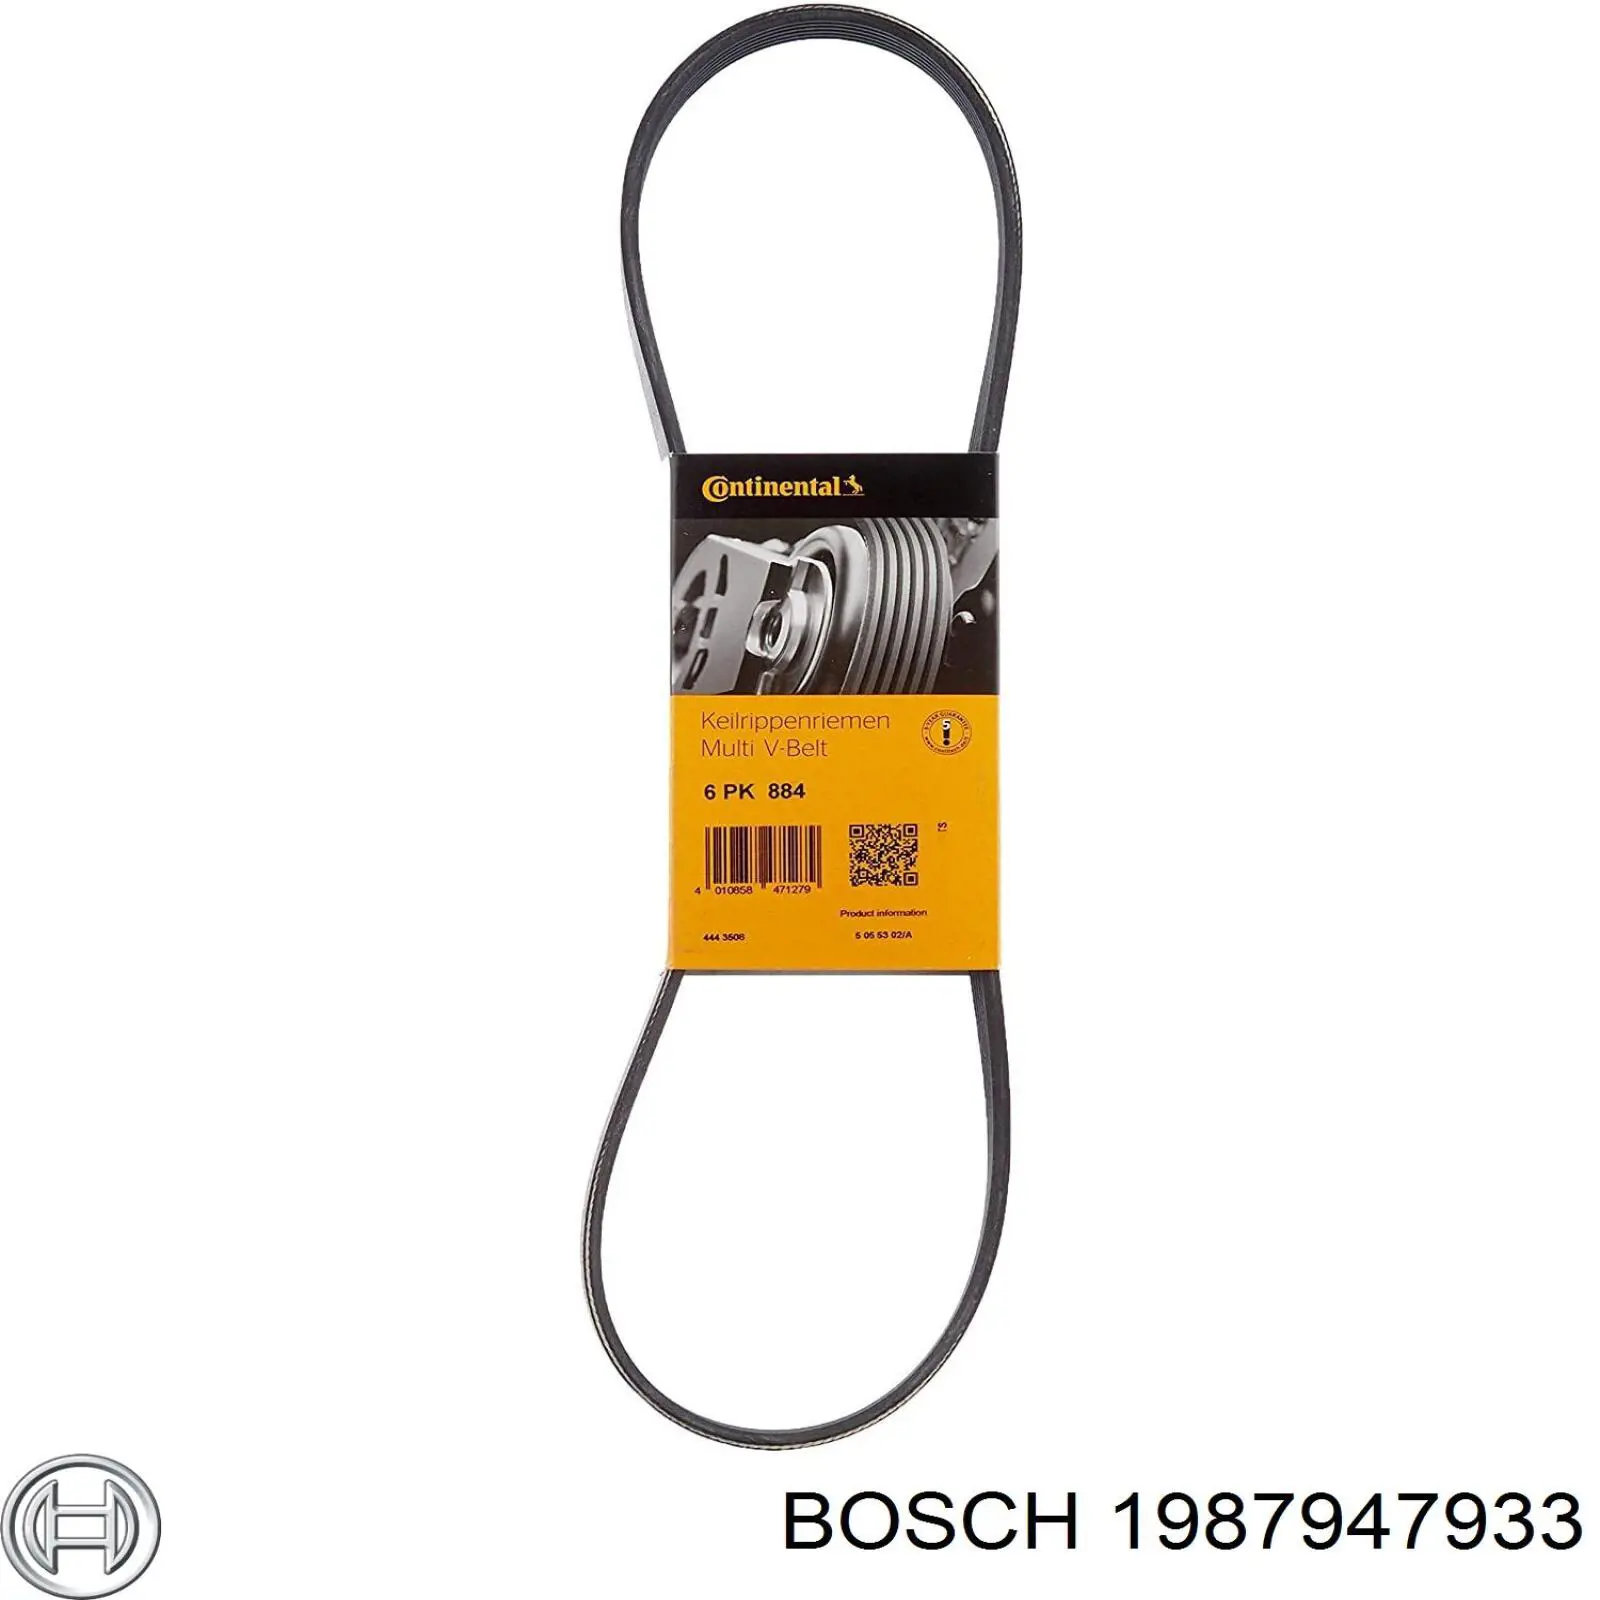 1987947933 Bosch correa trapezoidal